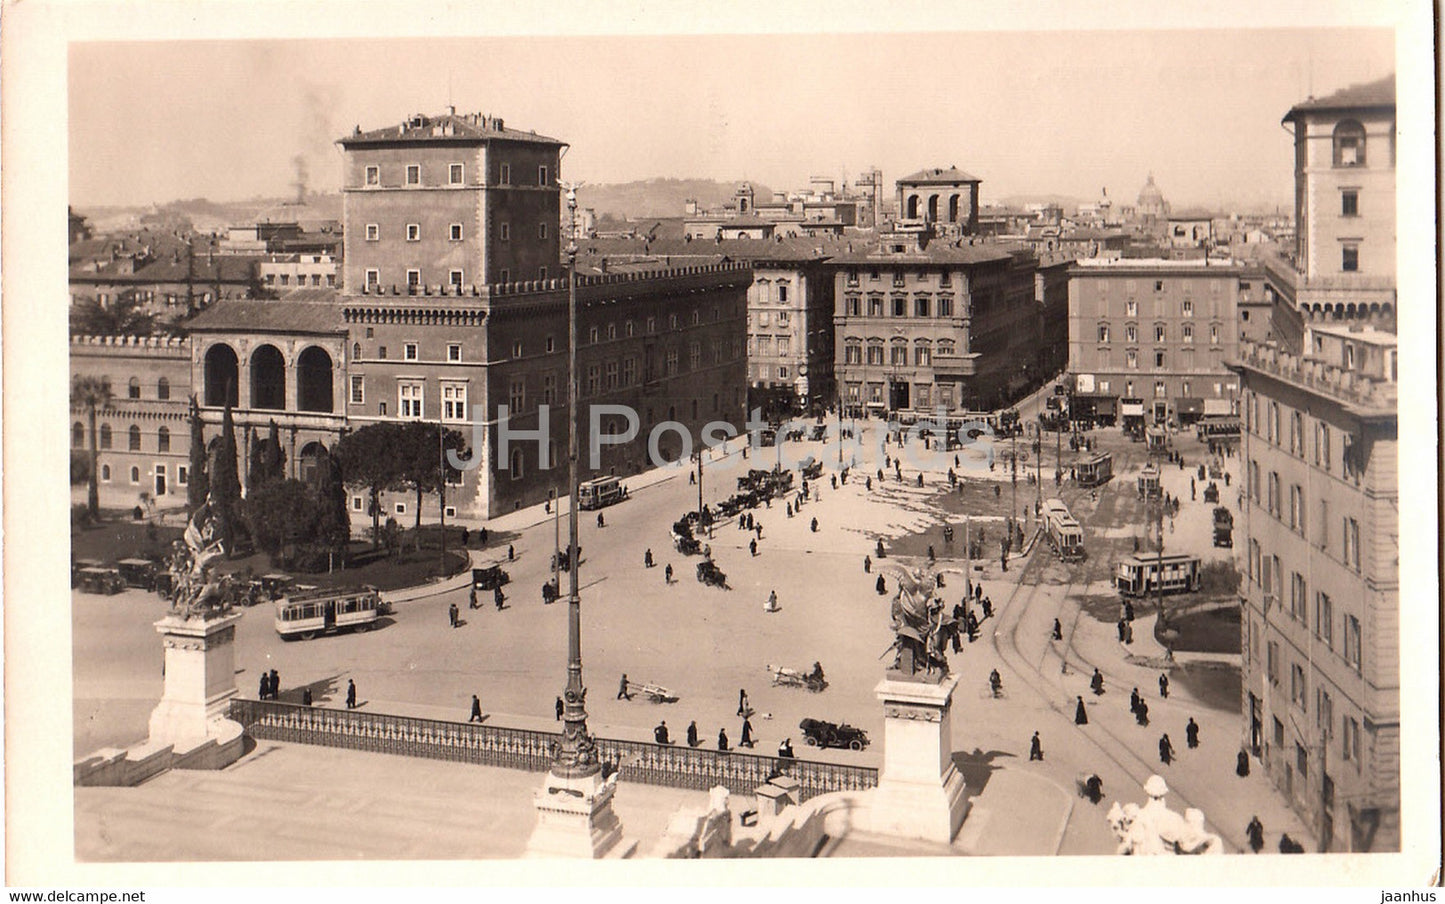 Roma - Rome - Piazza Venezia - 61897 - tram - old postcard - Italy - unused - JH Postcards